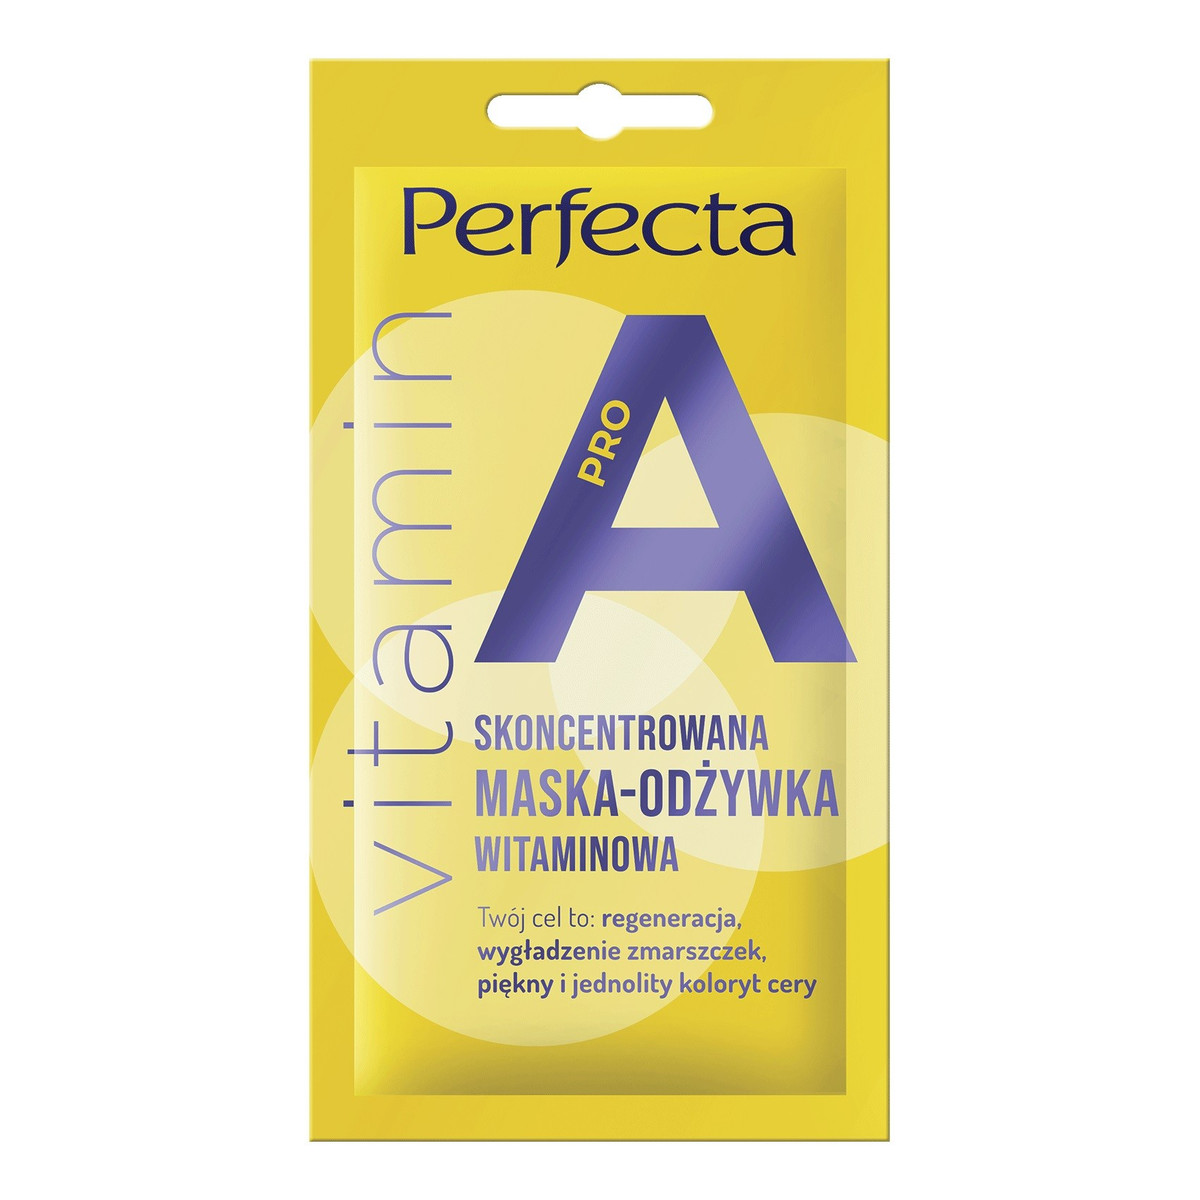 Perfecta Vitamin pro A Skoncentrowana Maska-odżywka witaminowa 8ml